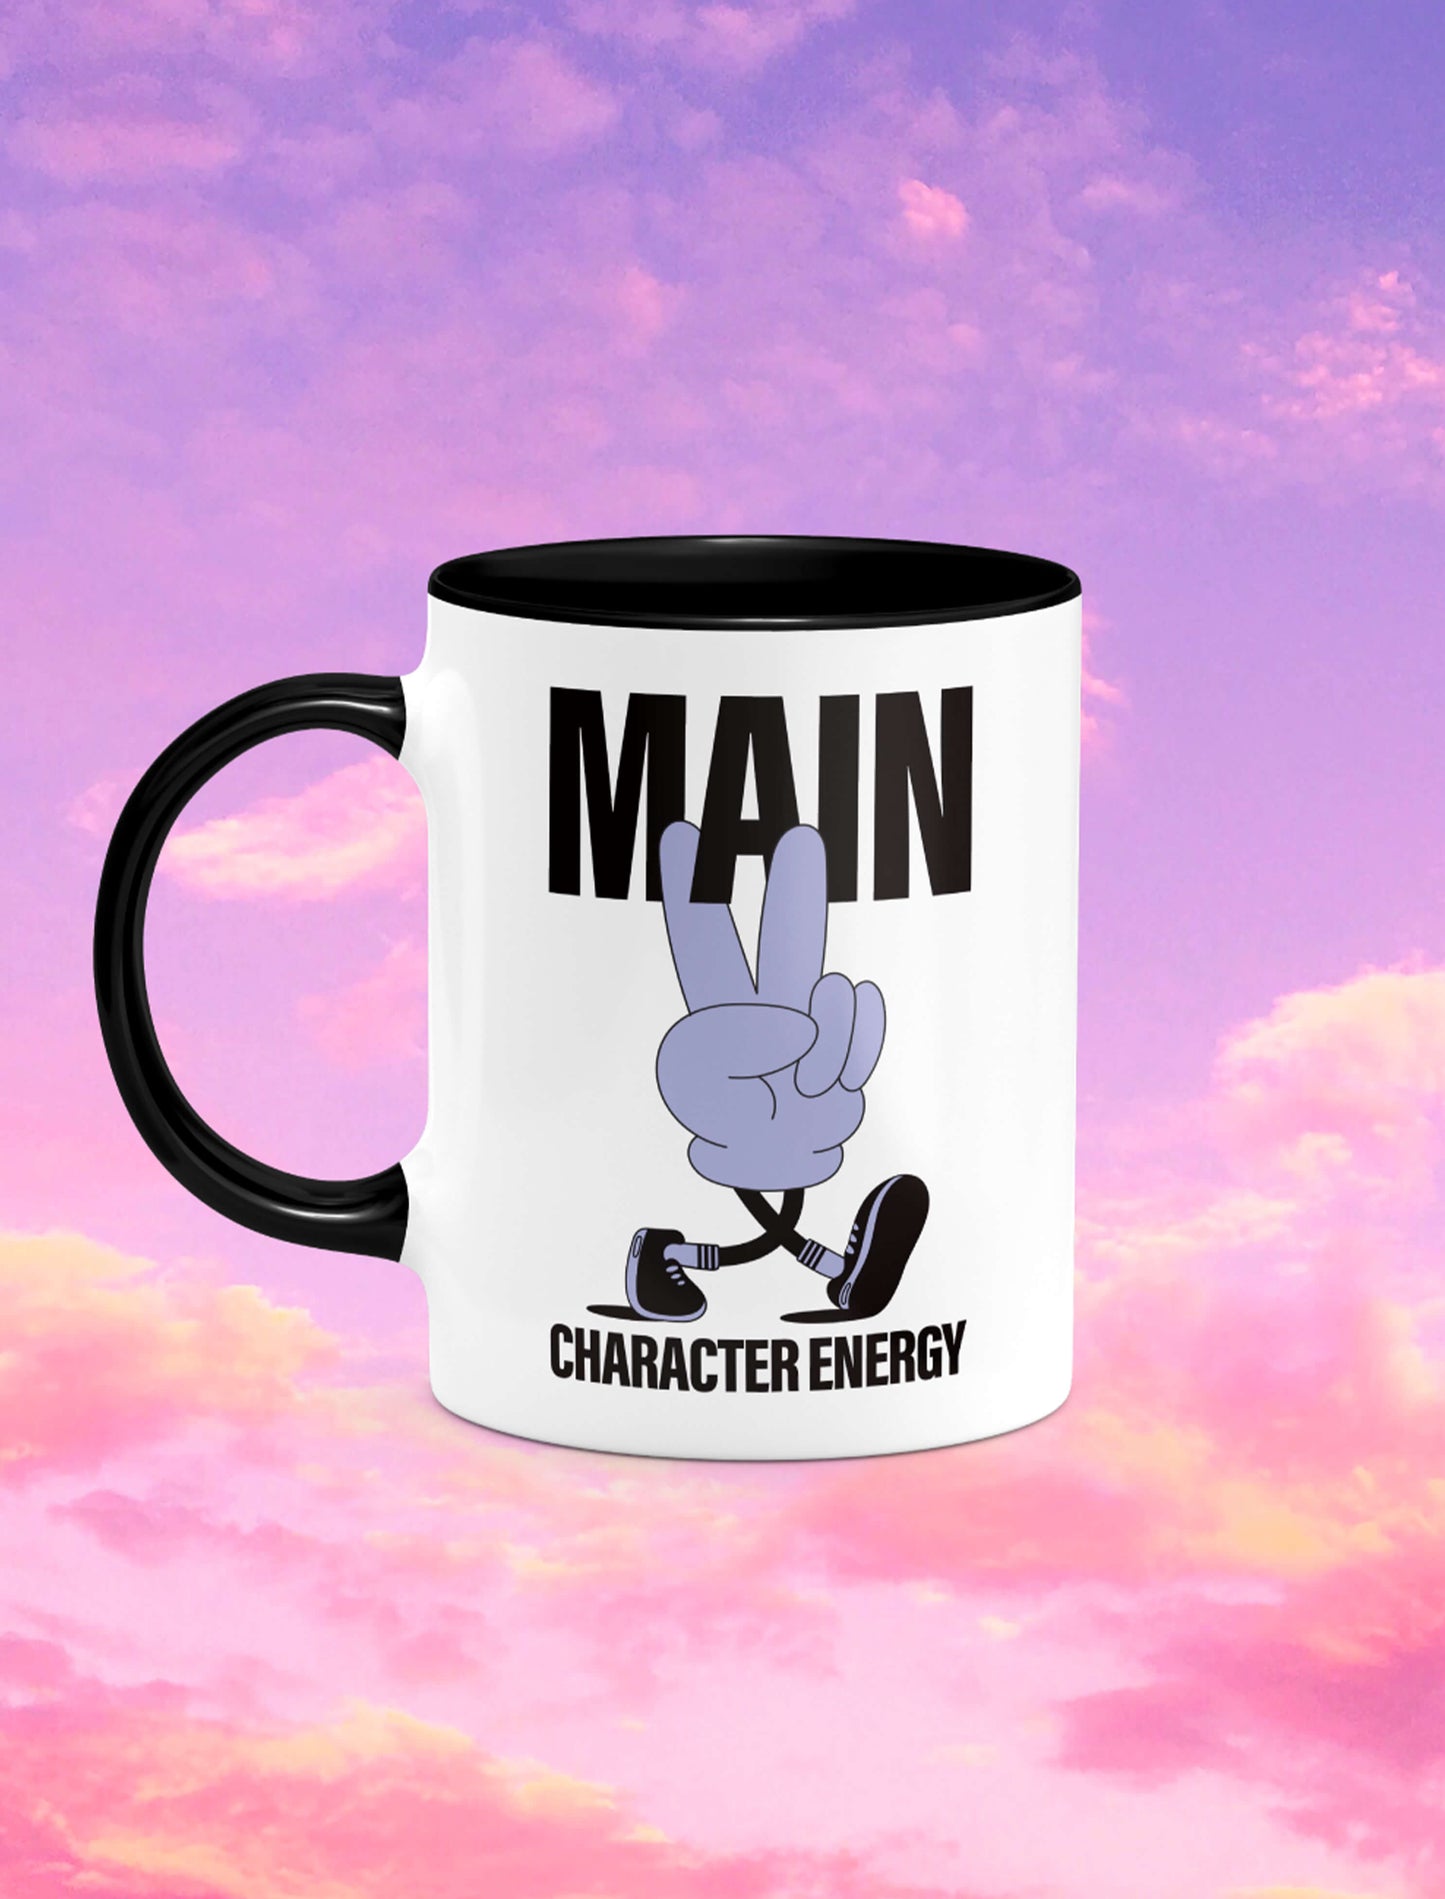 Main character energy mug in purple